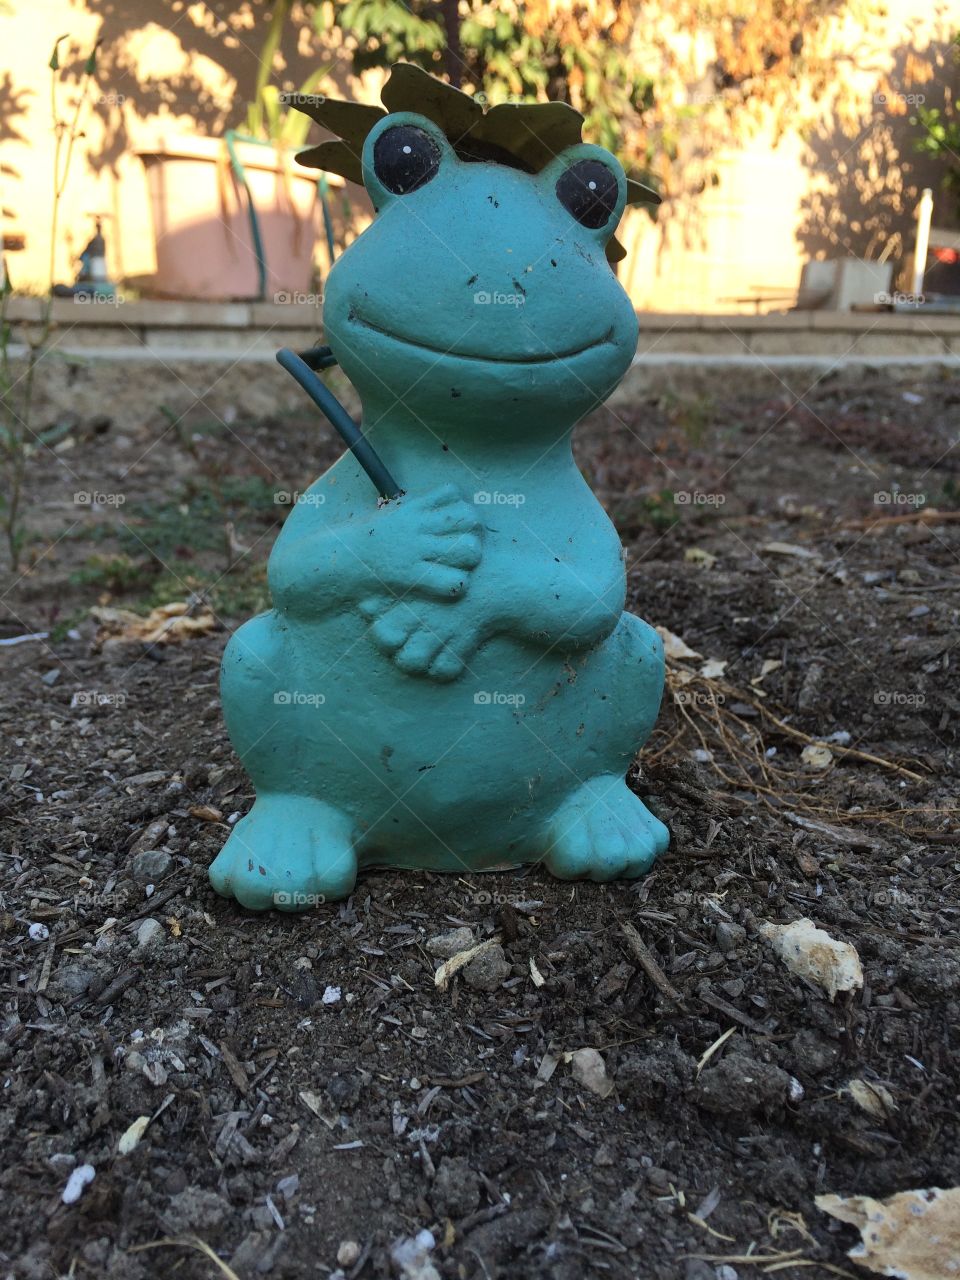 A frog,,. Being cute in my garden 